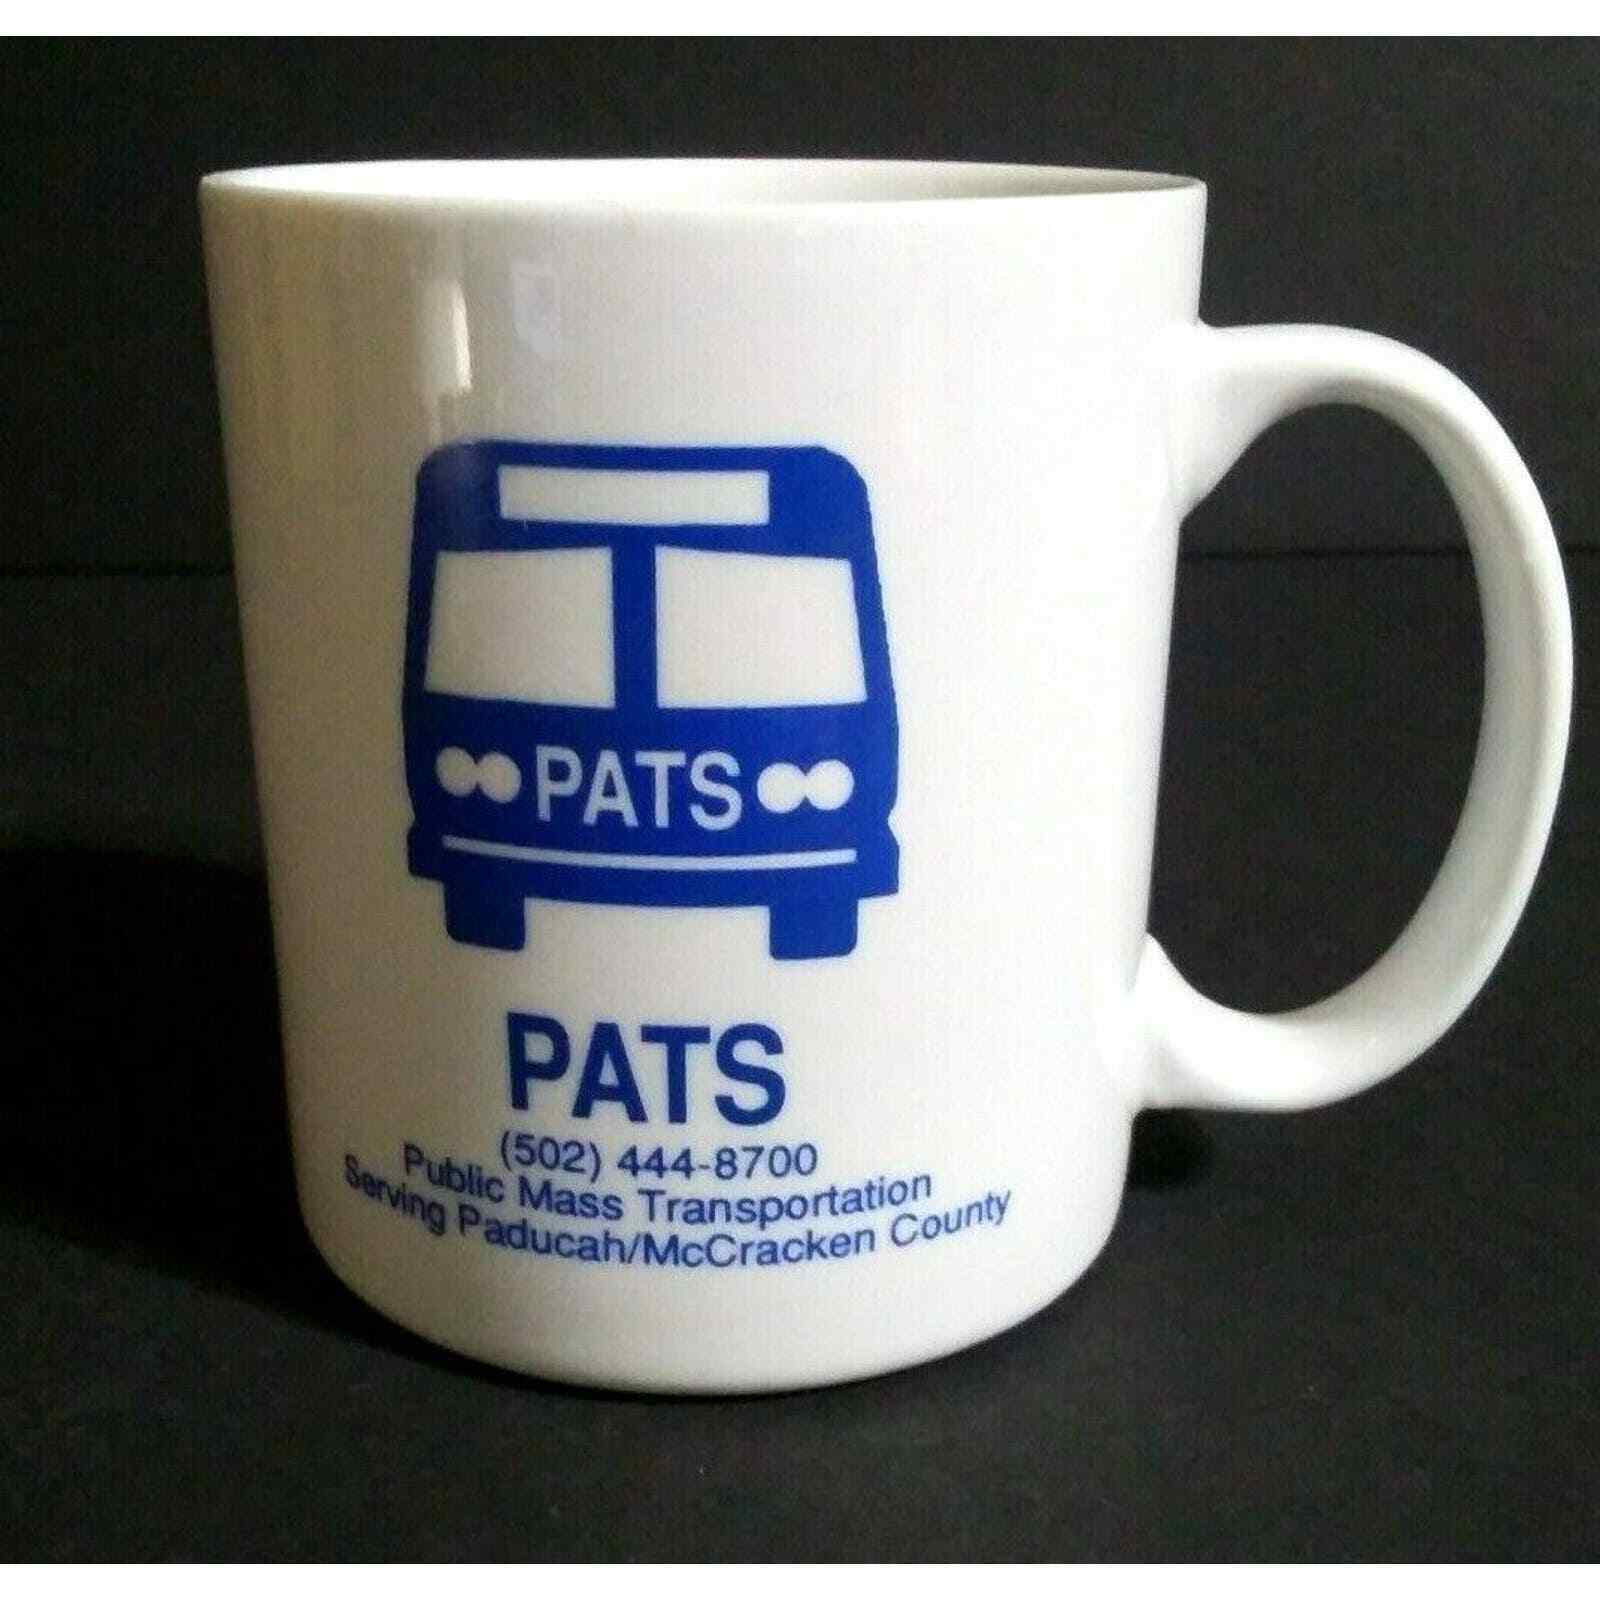 Pats Bus Service Mass Transit Paducah KY Coffee Cup Mug White Blue